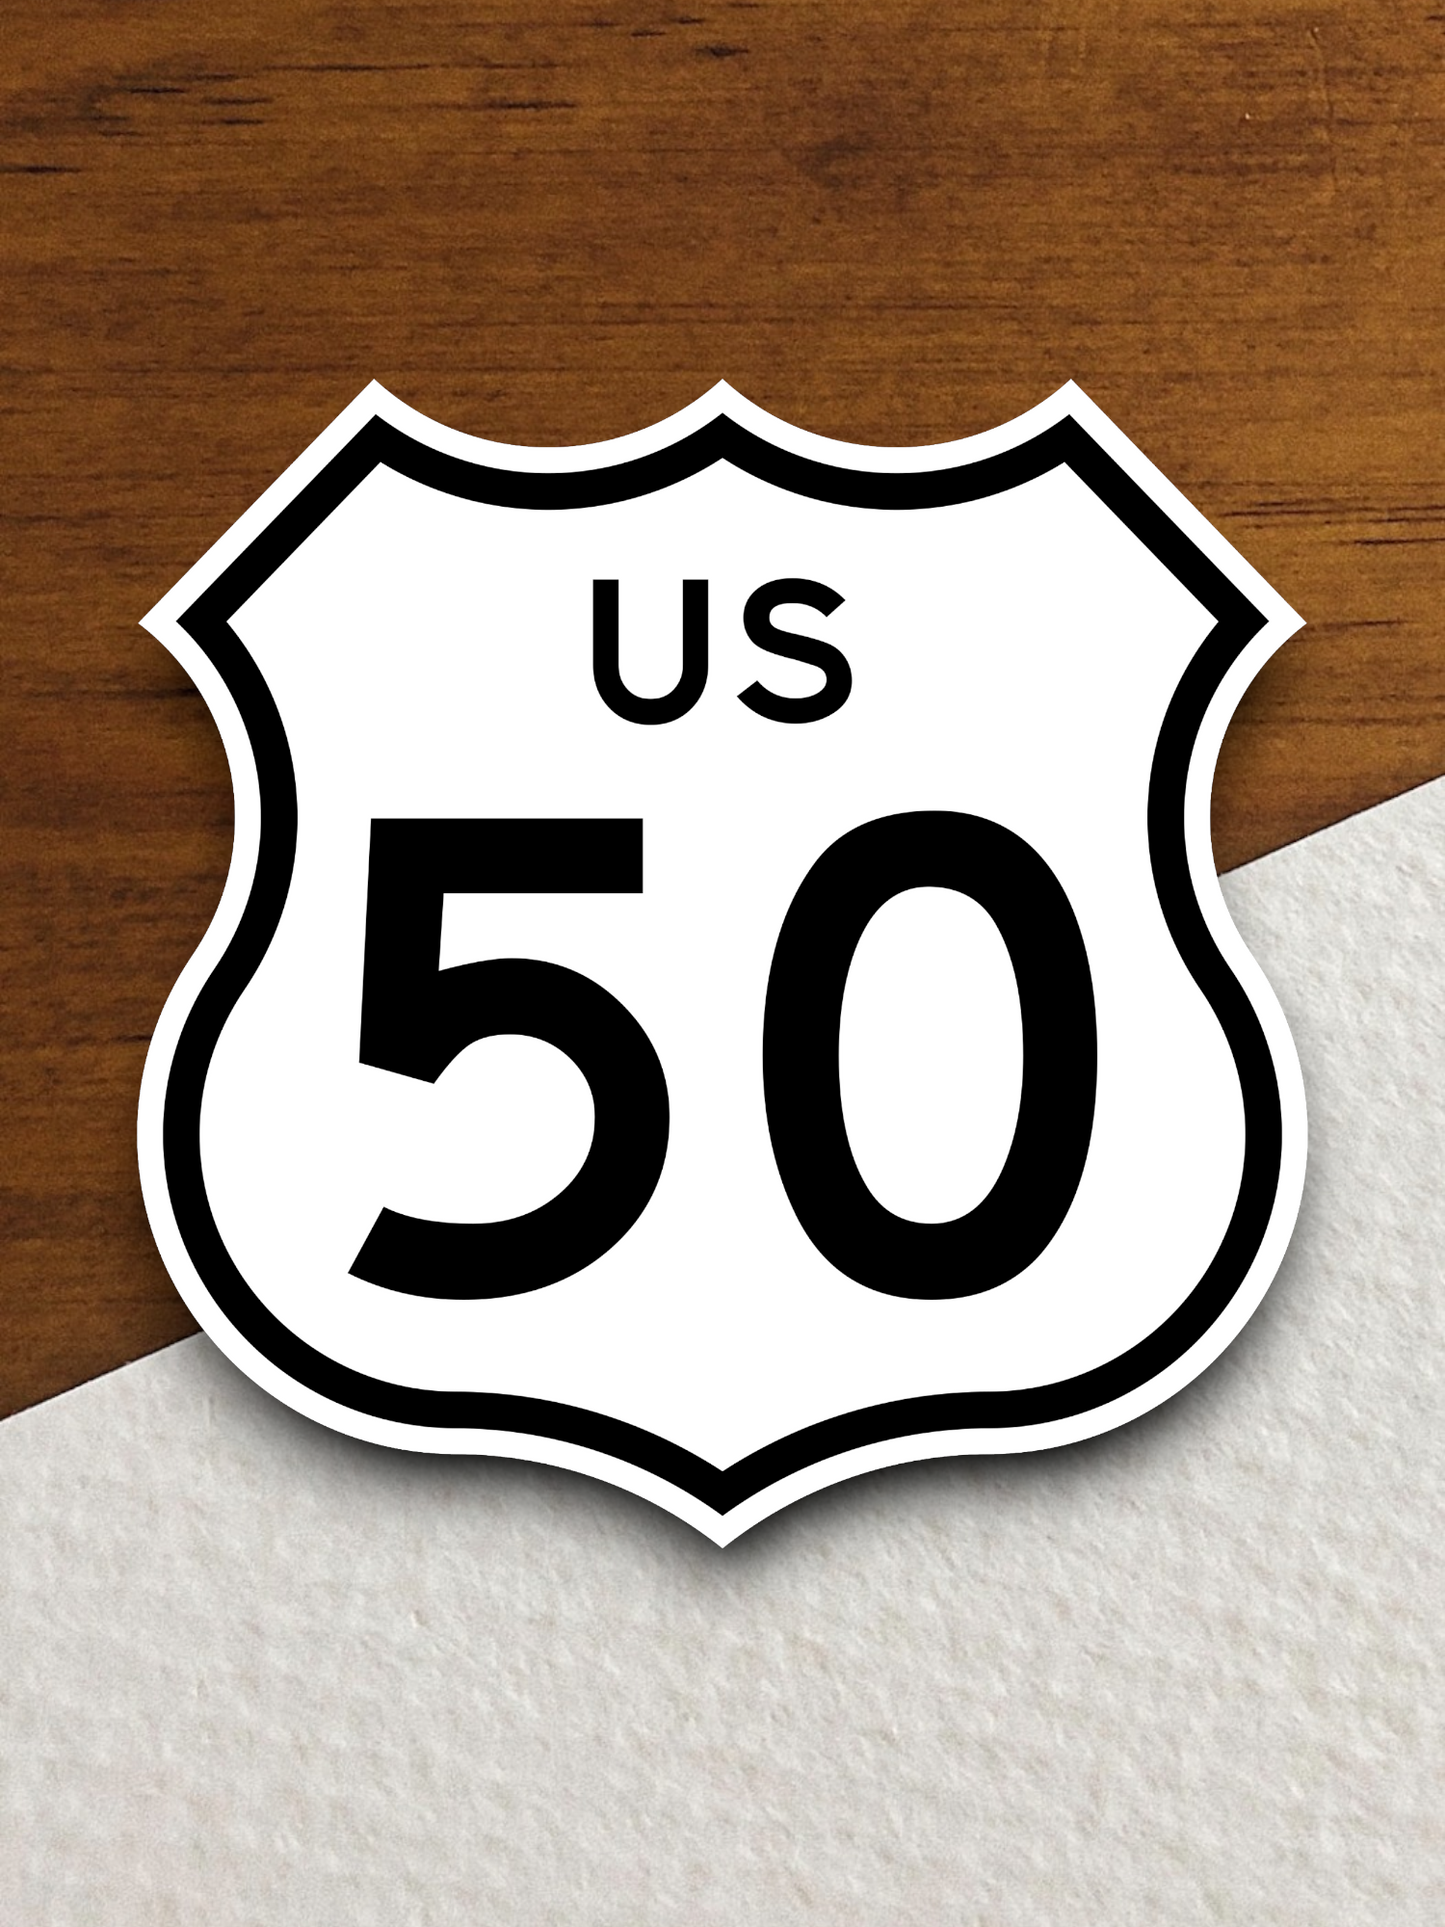 U.S. Route 50 Road Sign Sticker